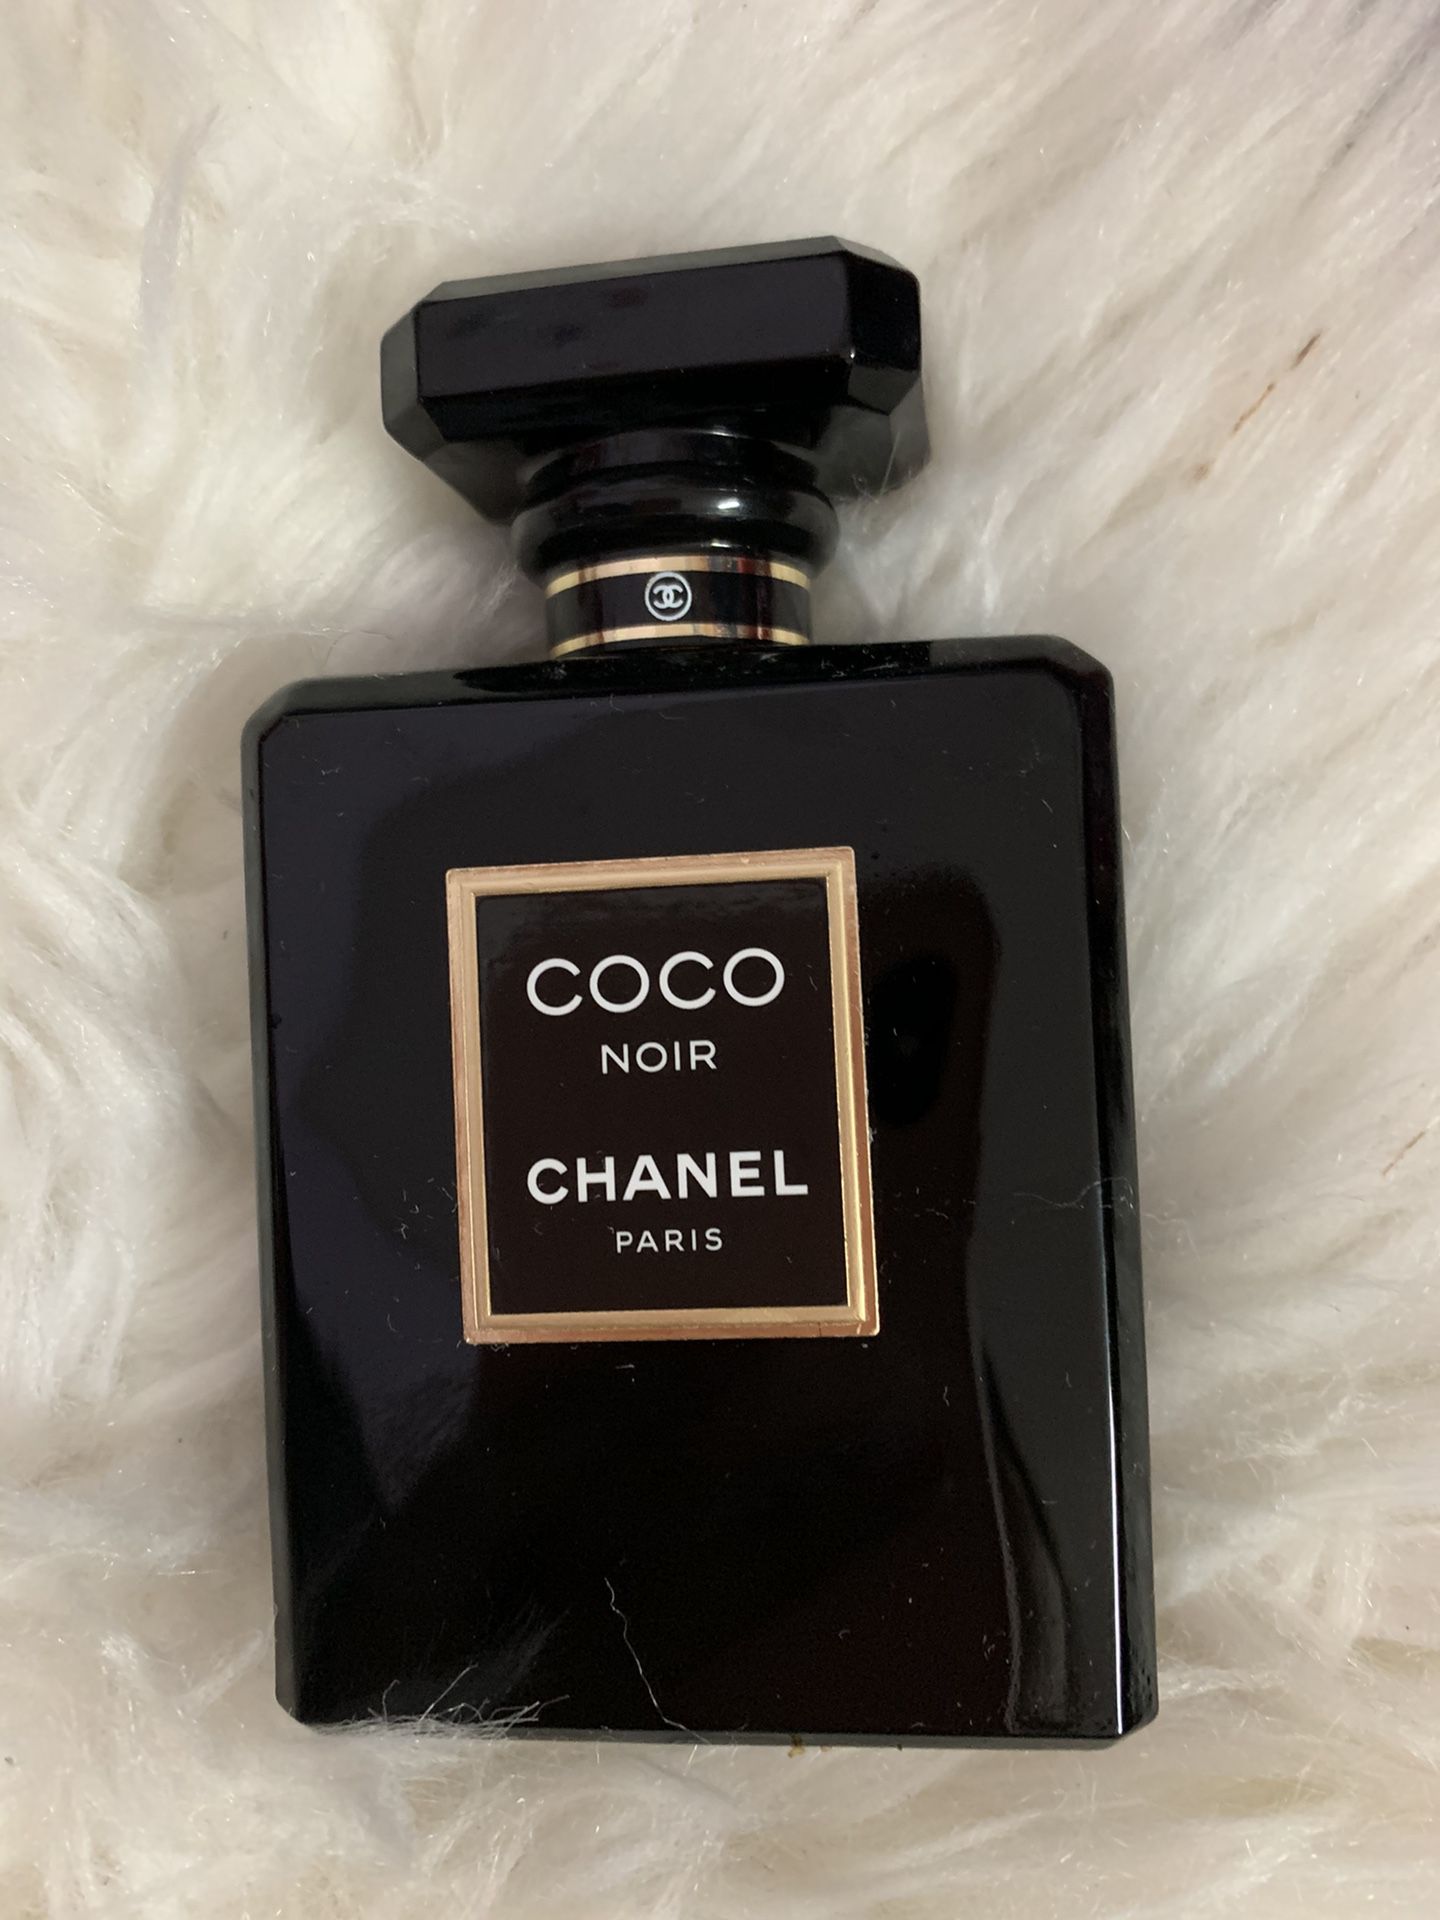 Chanel coco nior perfume